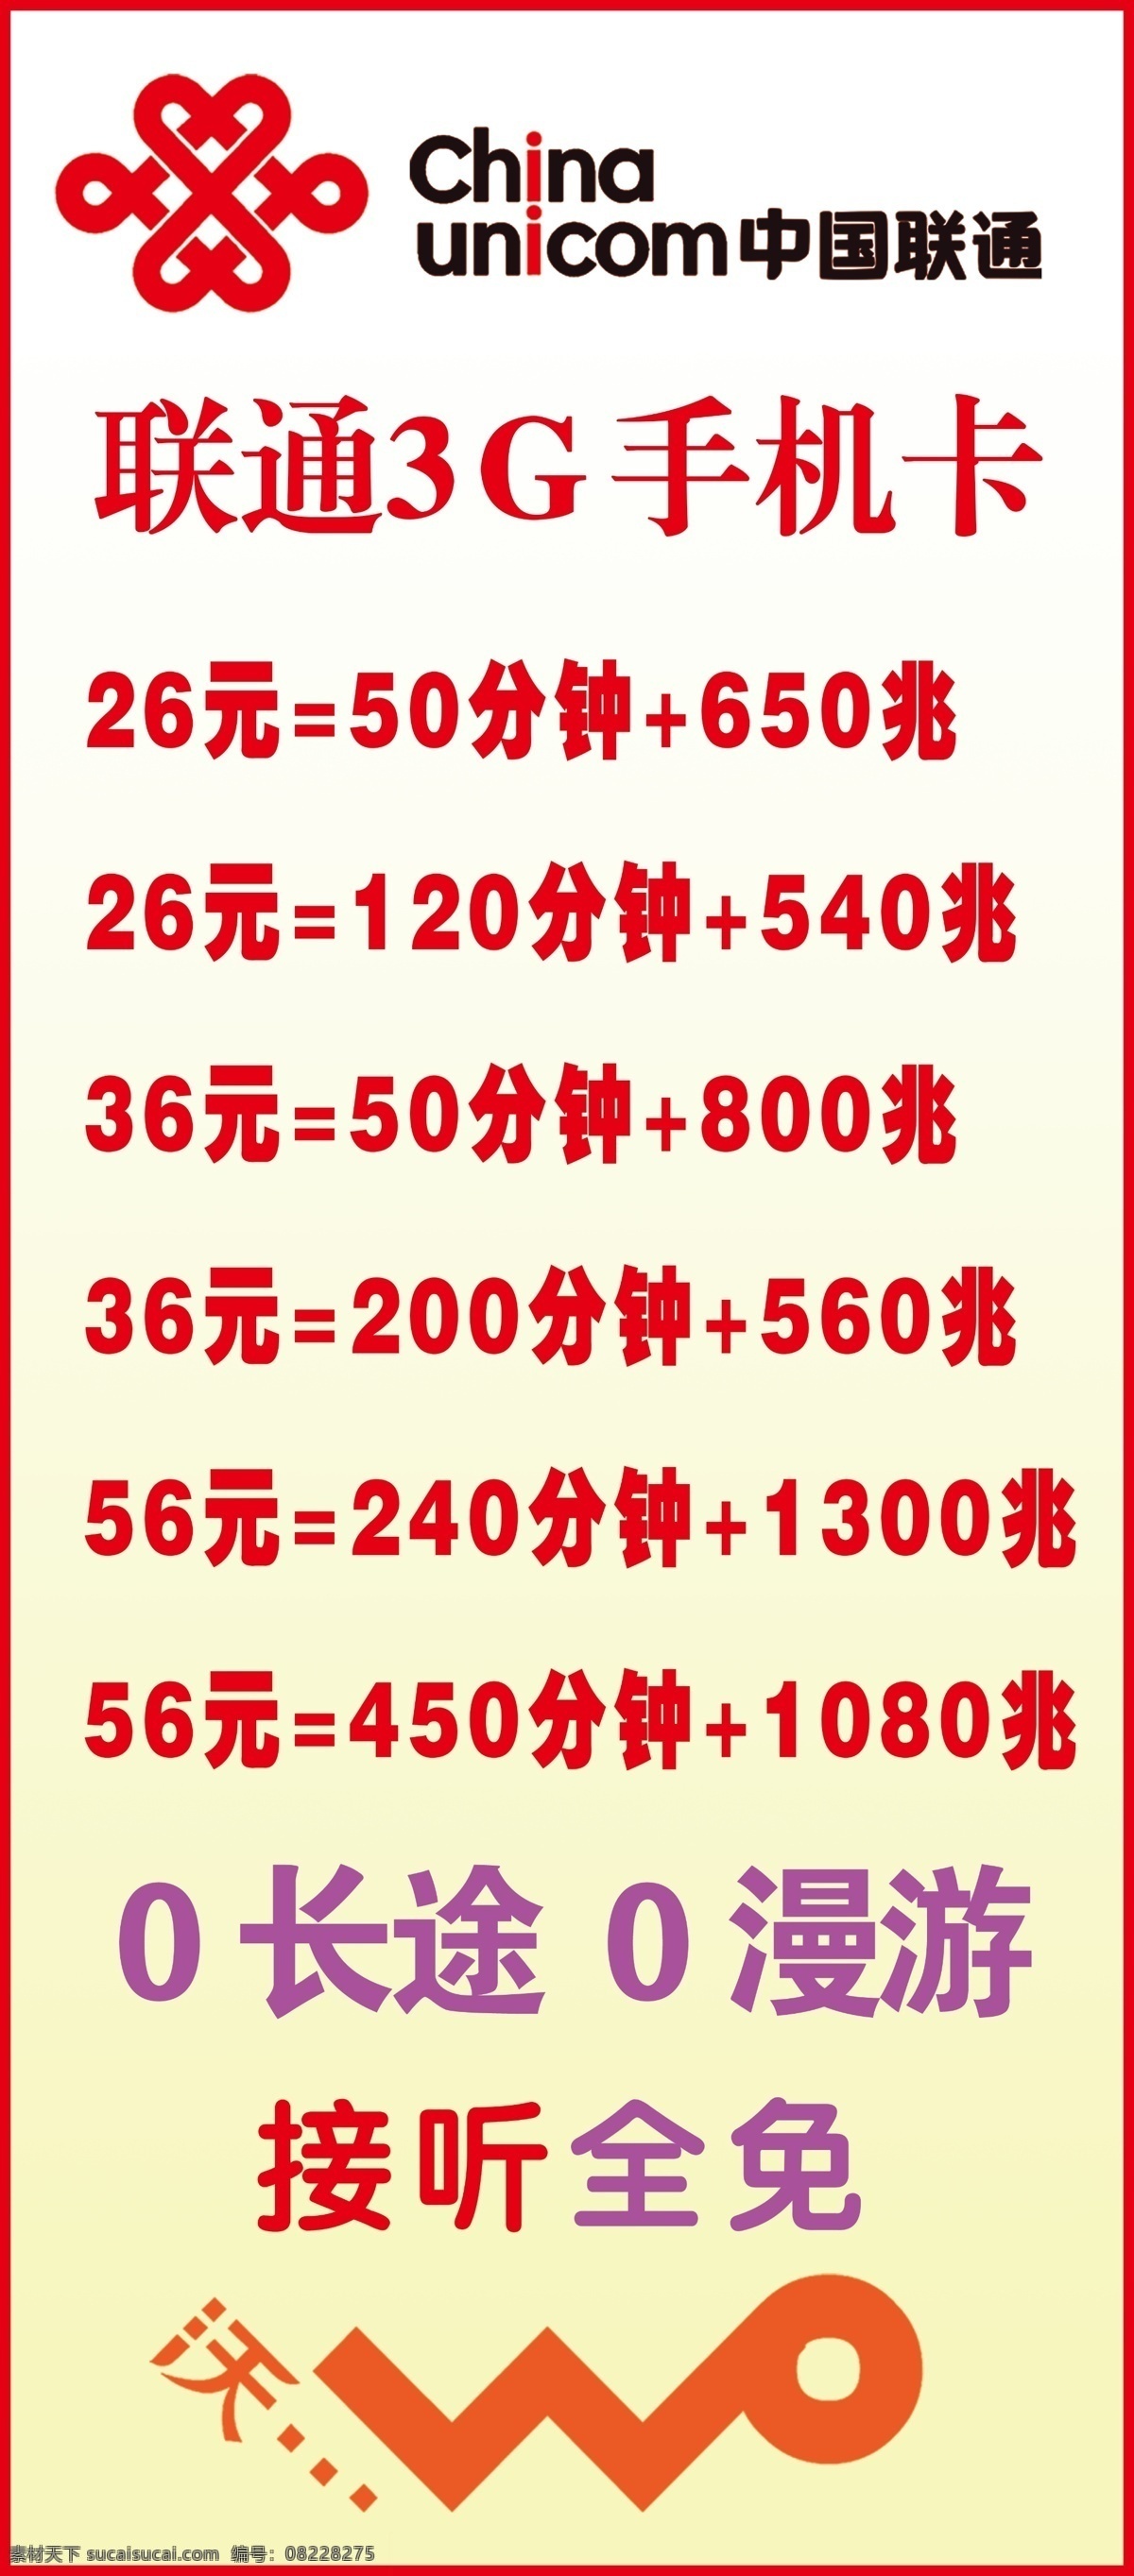 3g 广告设计模板 设计模板 手机卡 源文件 中国联通 模板下载 接听全免 0长途 0漫游 其他海报设计